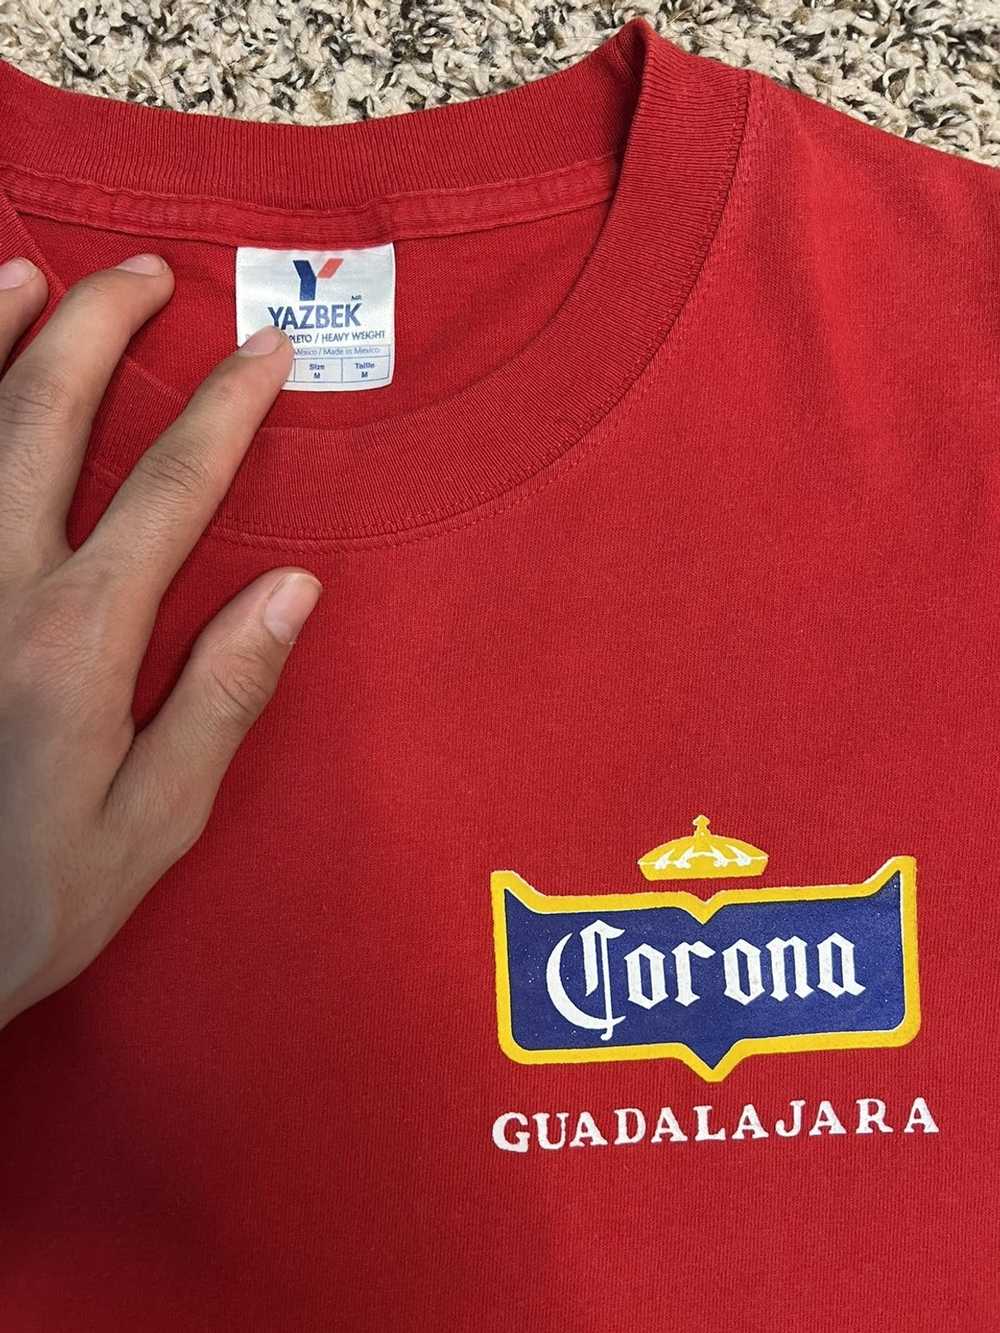 Vintage Corona Mexican Drink Beer Shirt - image 2